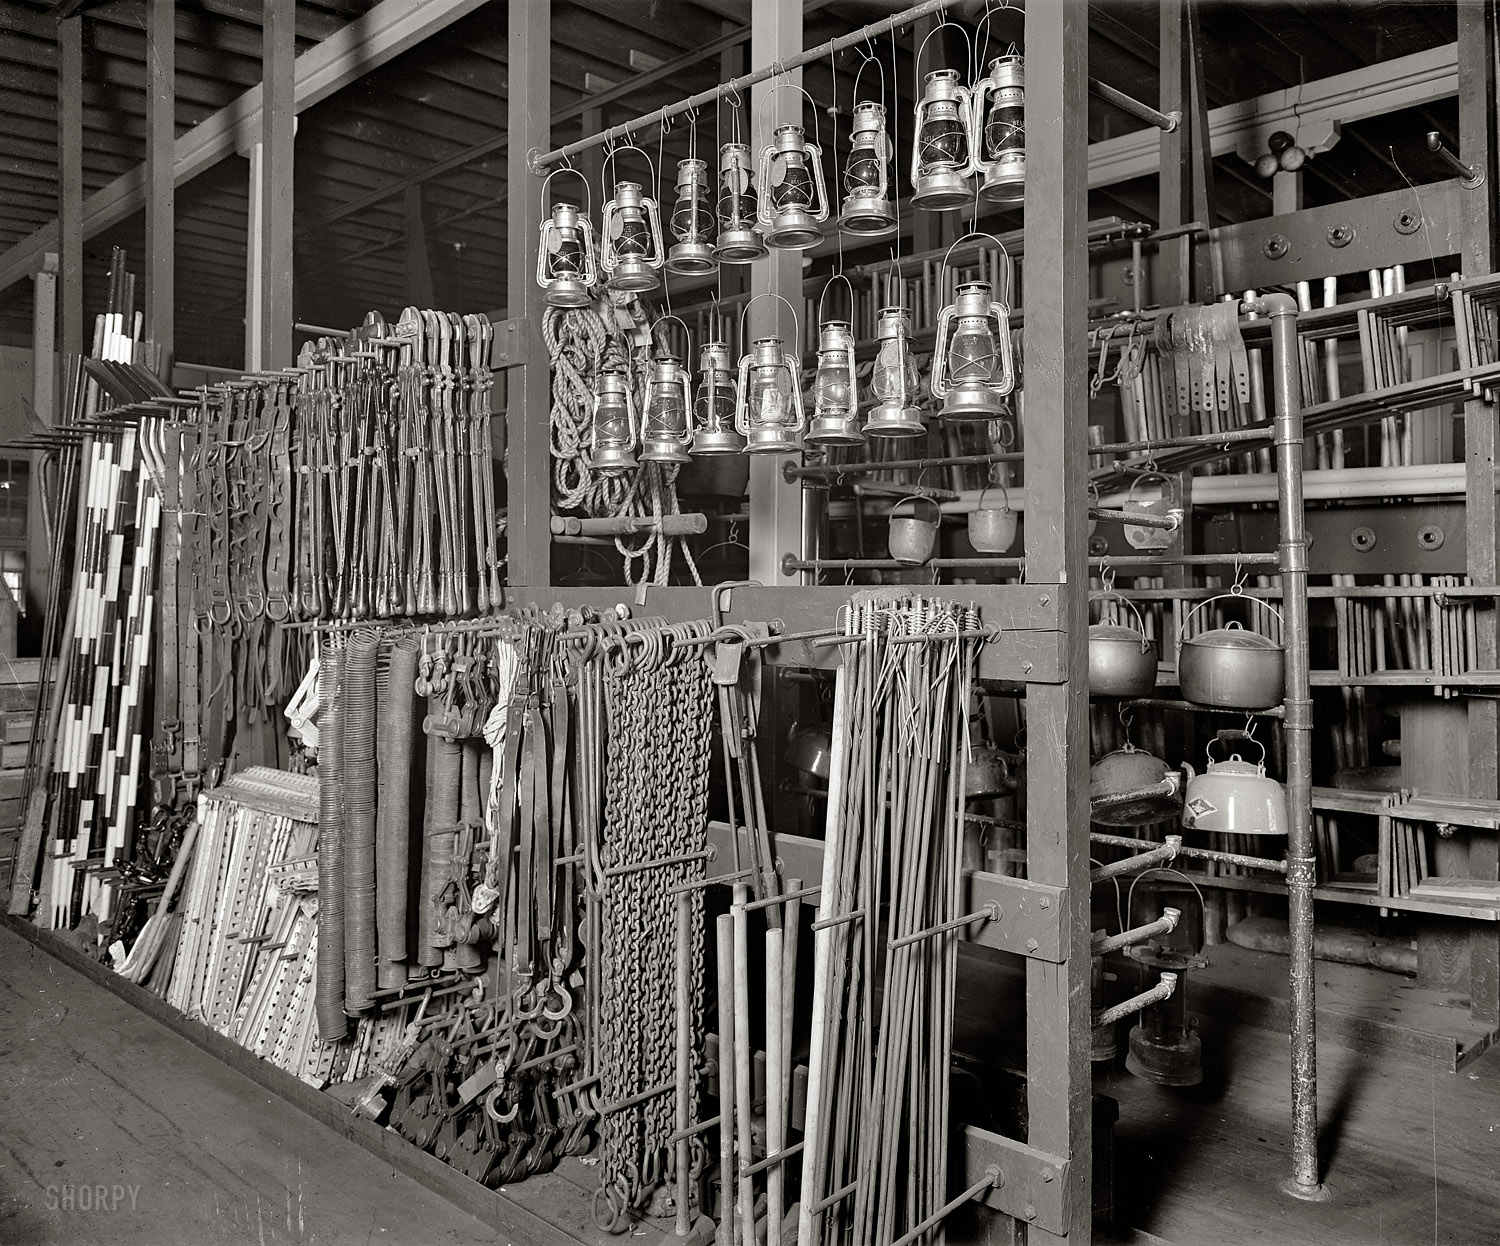 Washington, D.C., circa 1922. "Chesapeake & Potomac Telephone Co." The maintenance shed. National Photo Co. Collection glass negative. View full size.